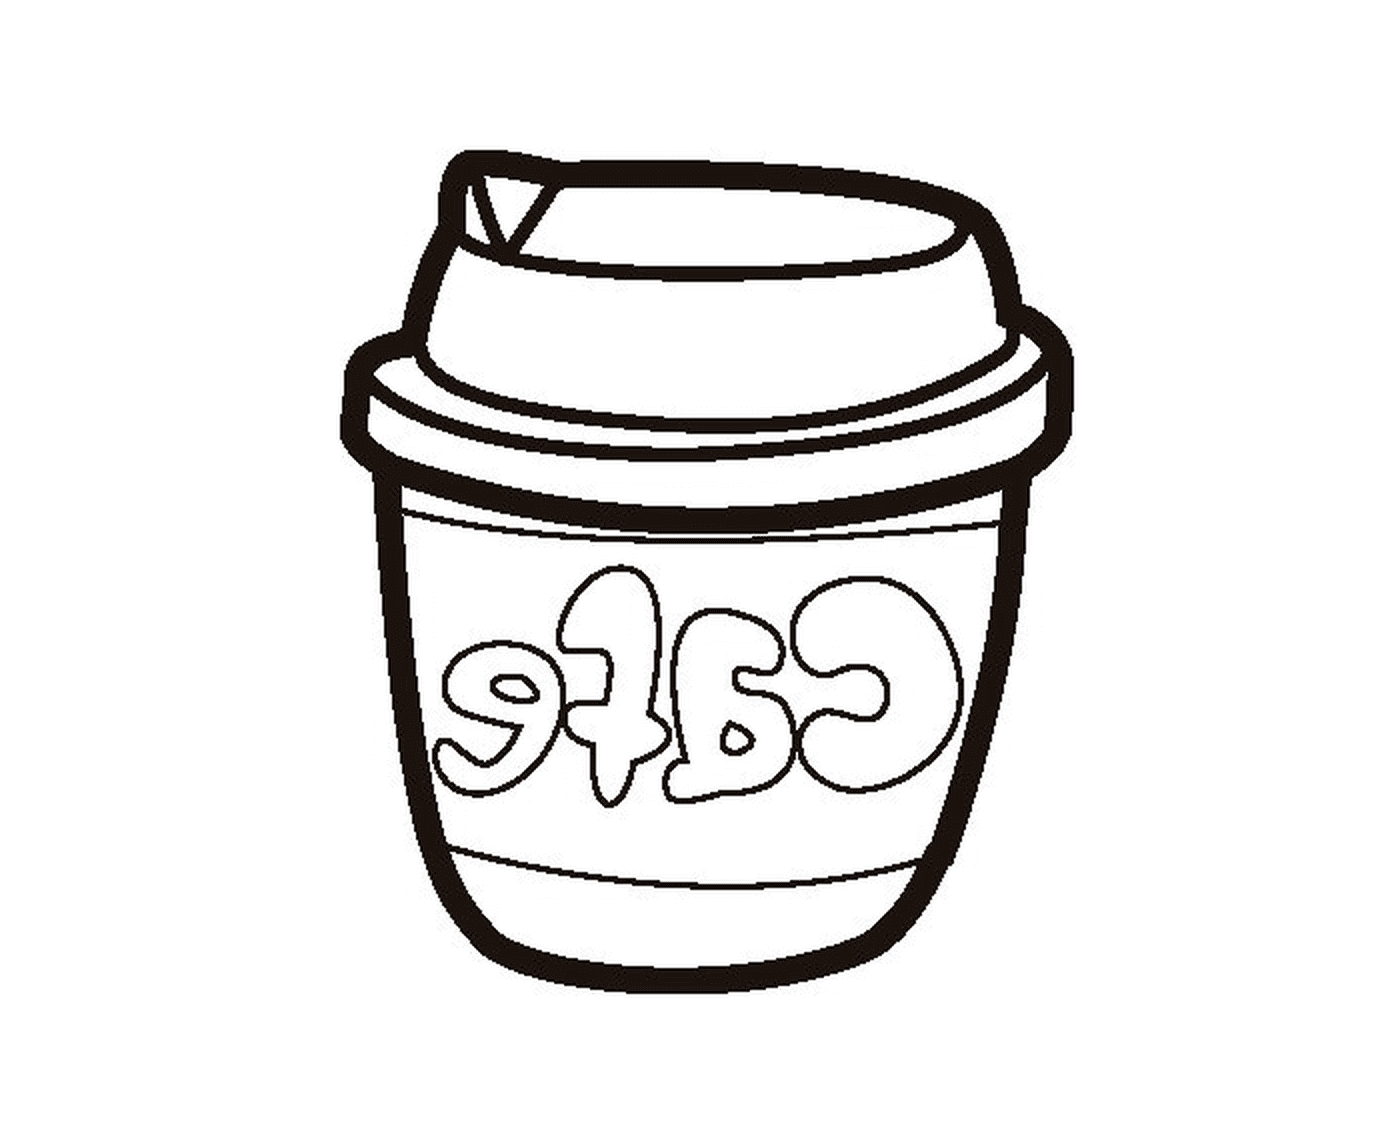  Un vaso de café Starbucks 